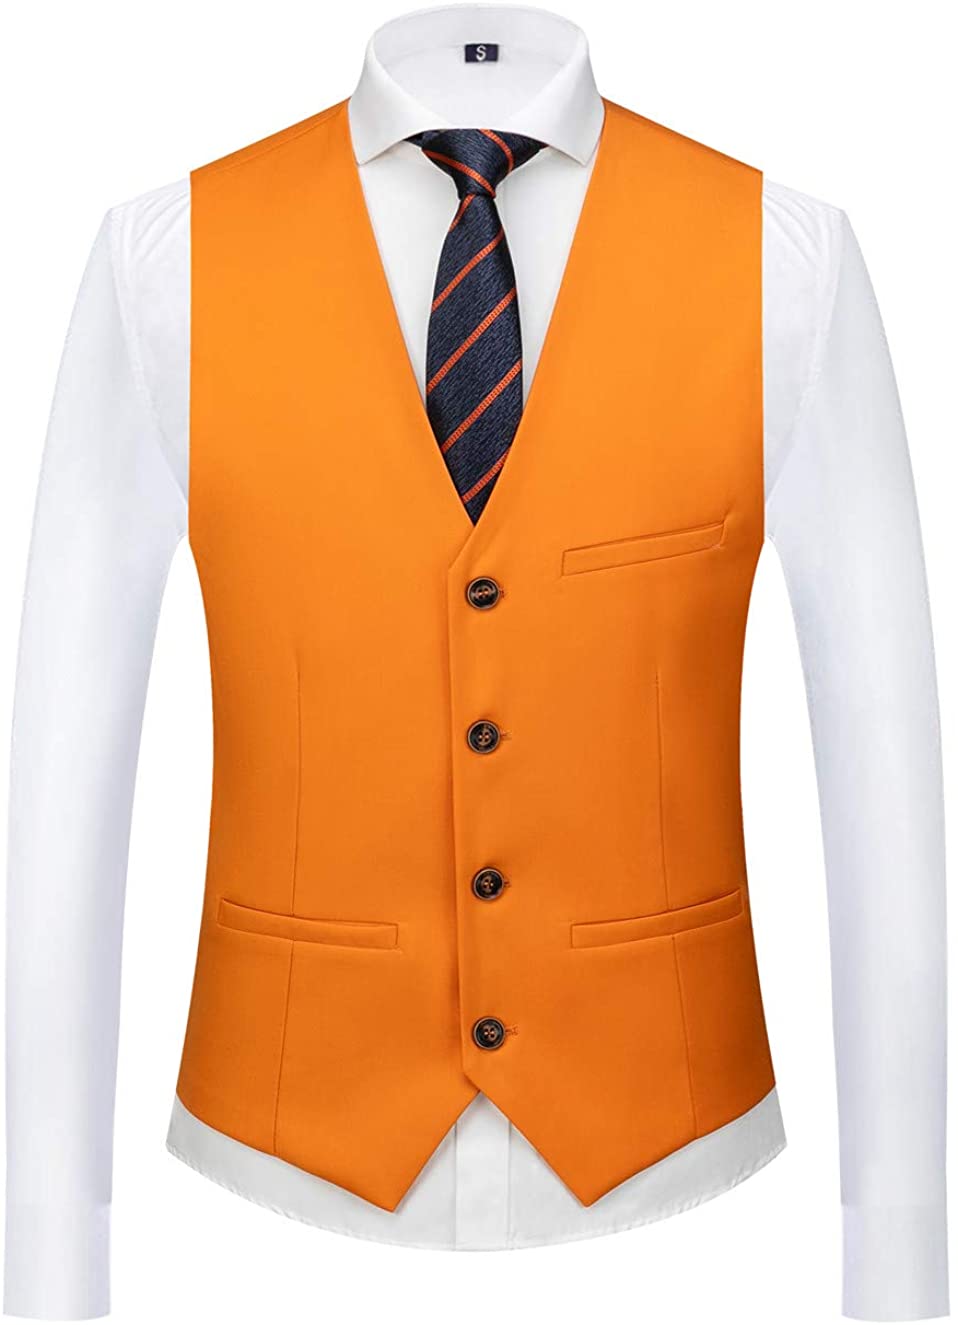 MOGU Mens Waistcoat Casual Suit Vest 23 Colors for Prom Party